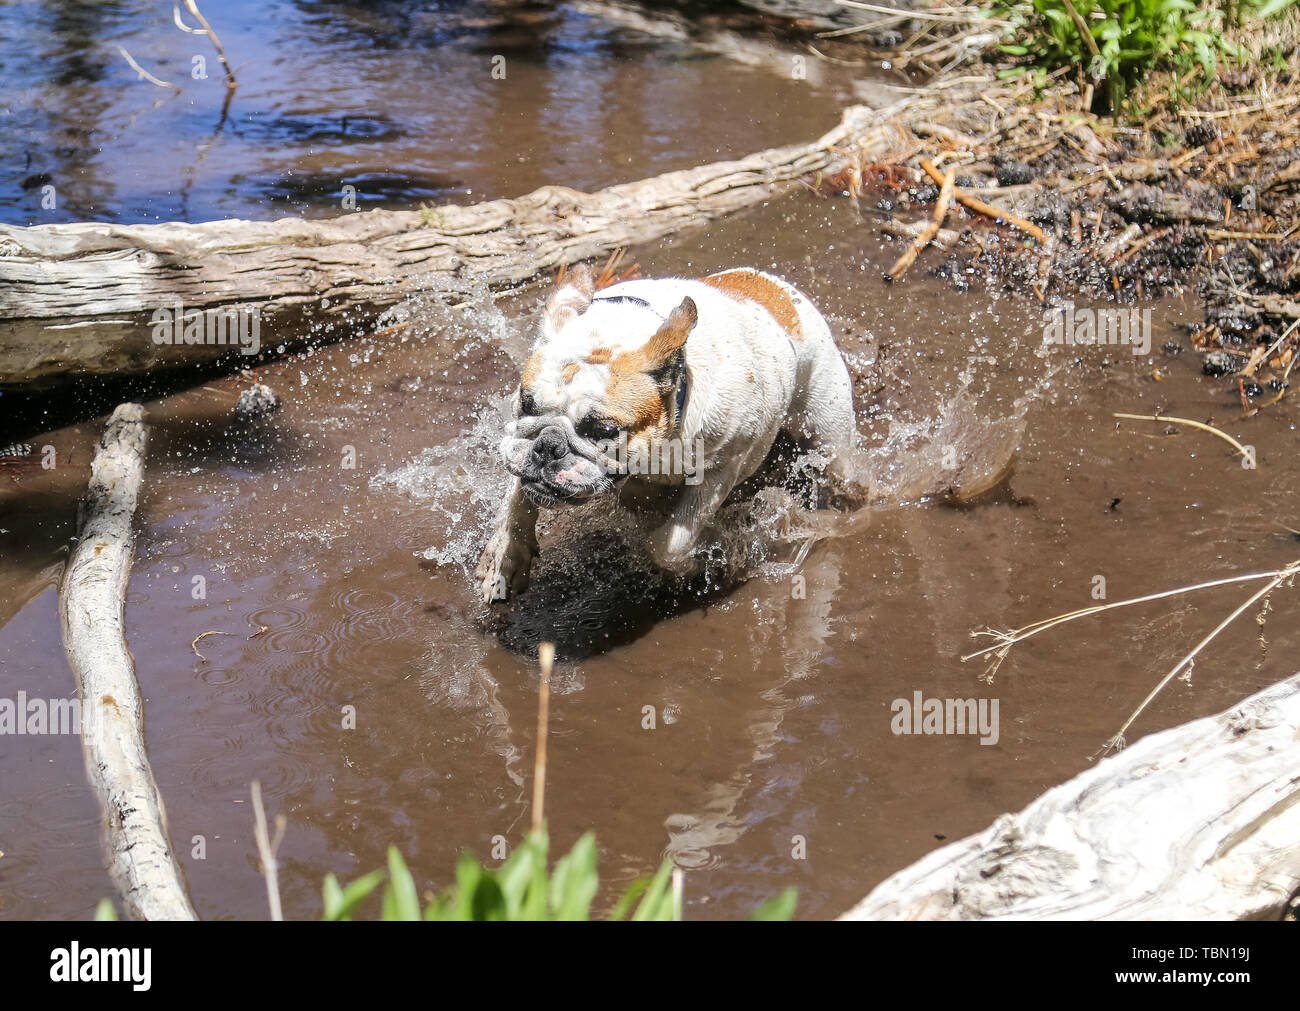 Bulldog playing and running through muddy water in a creek Stock Photo